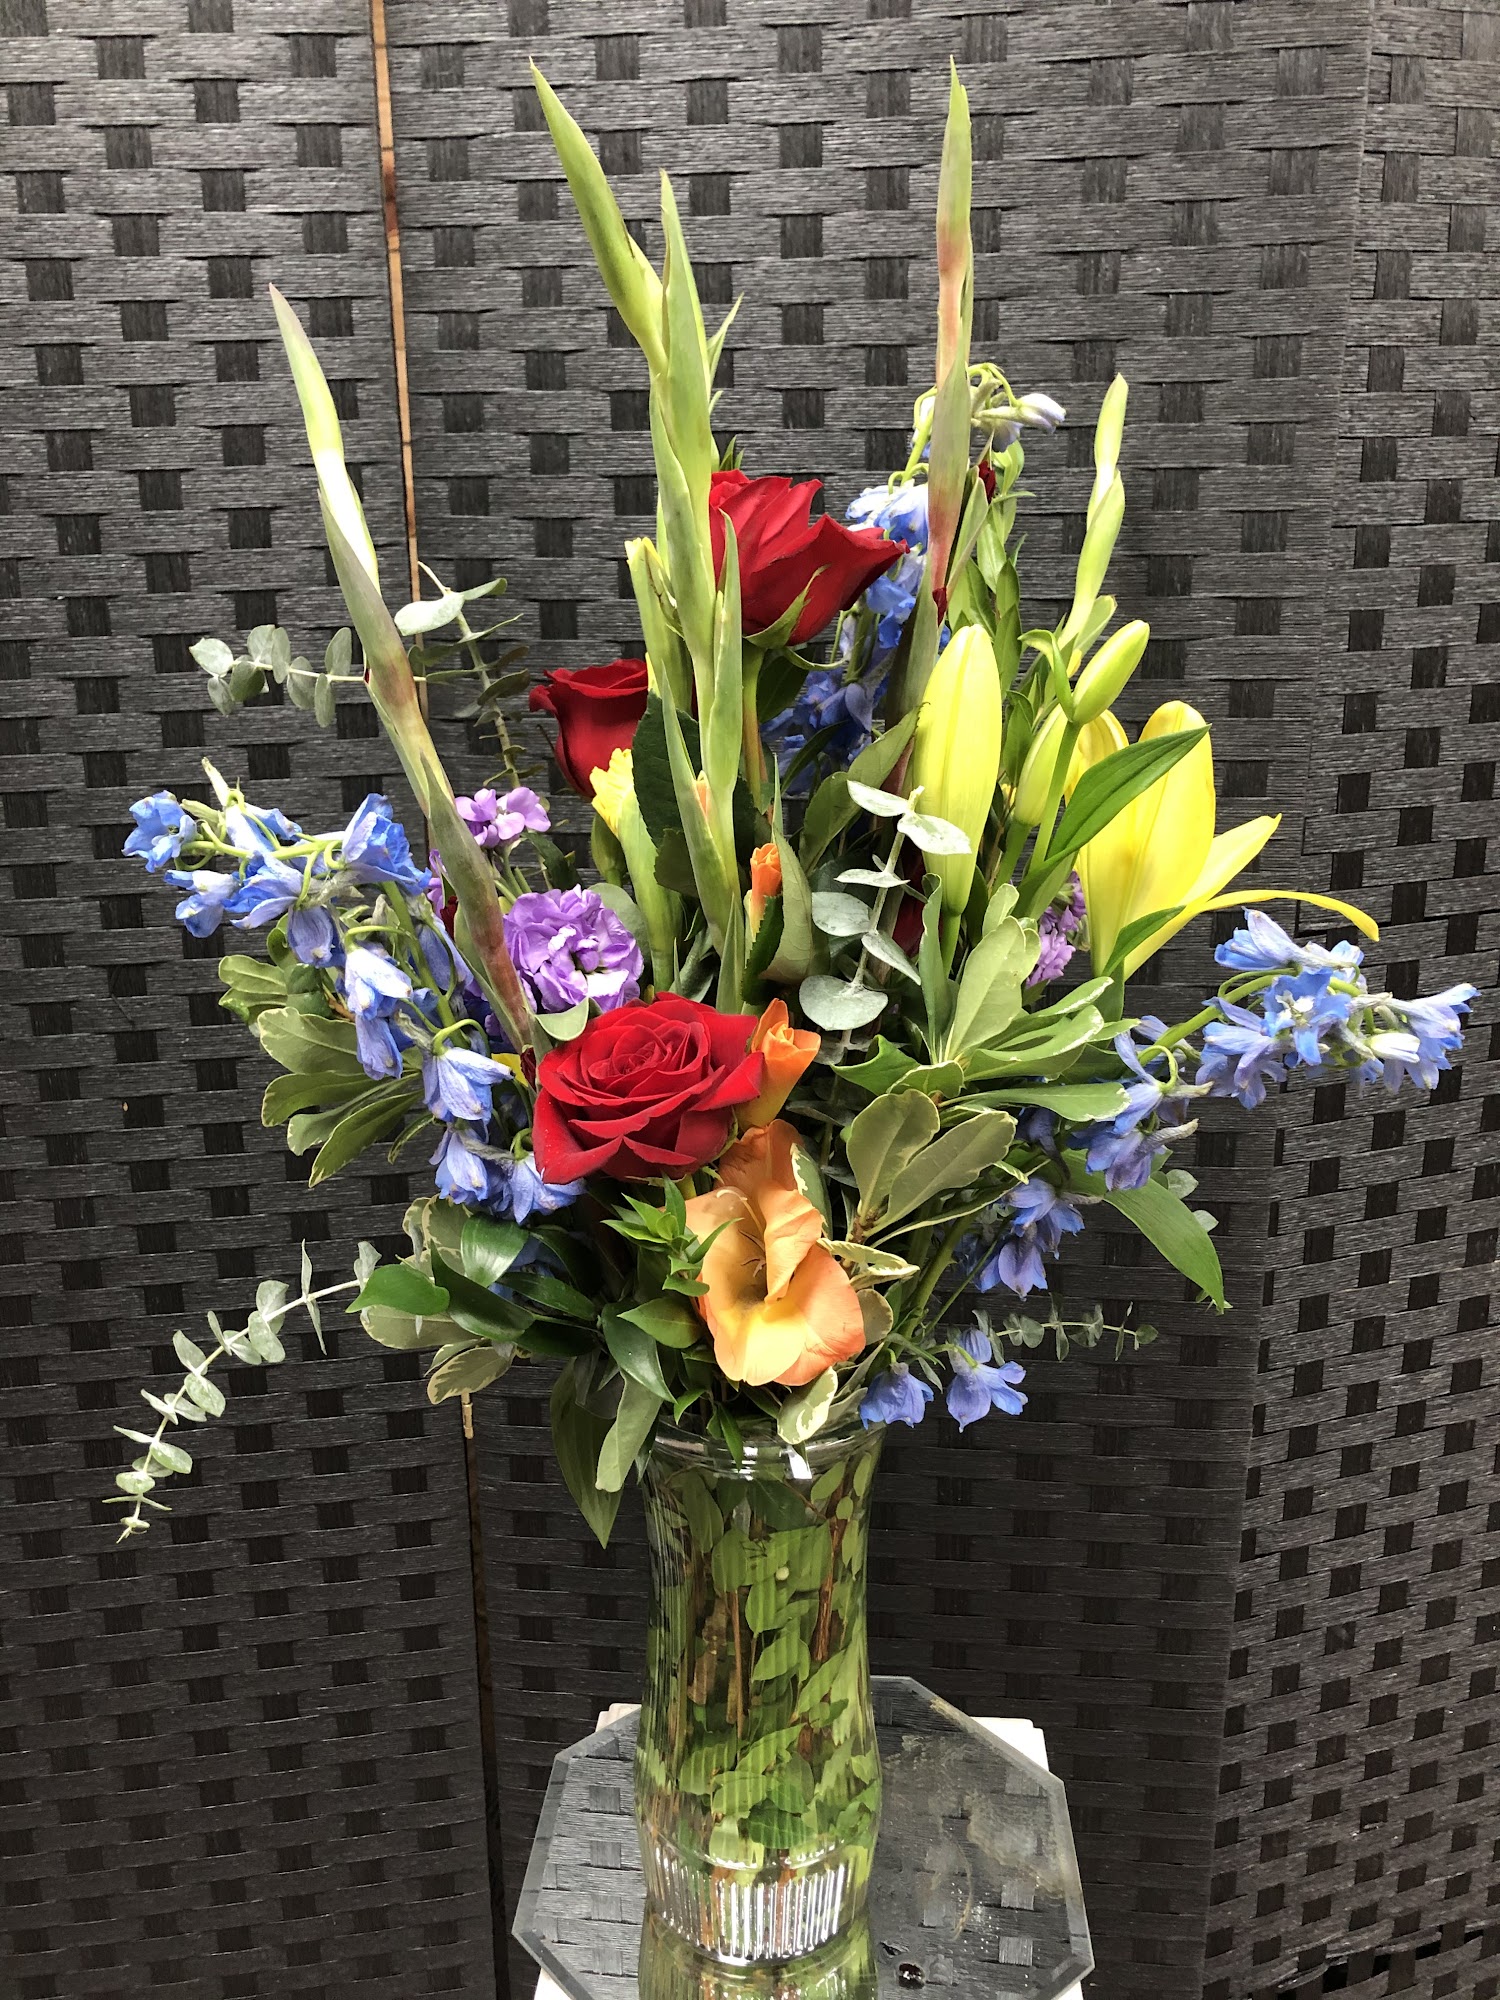 Pugliese Flowers & Gifts 137 Grant Ave, Vandergrift Pennsylvania 15690